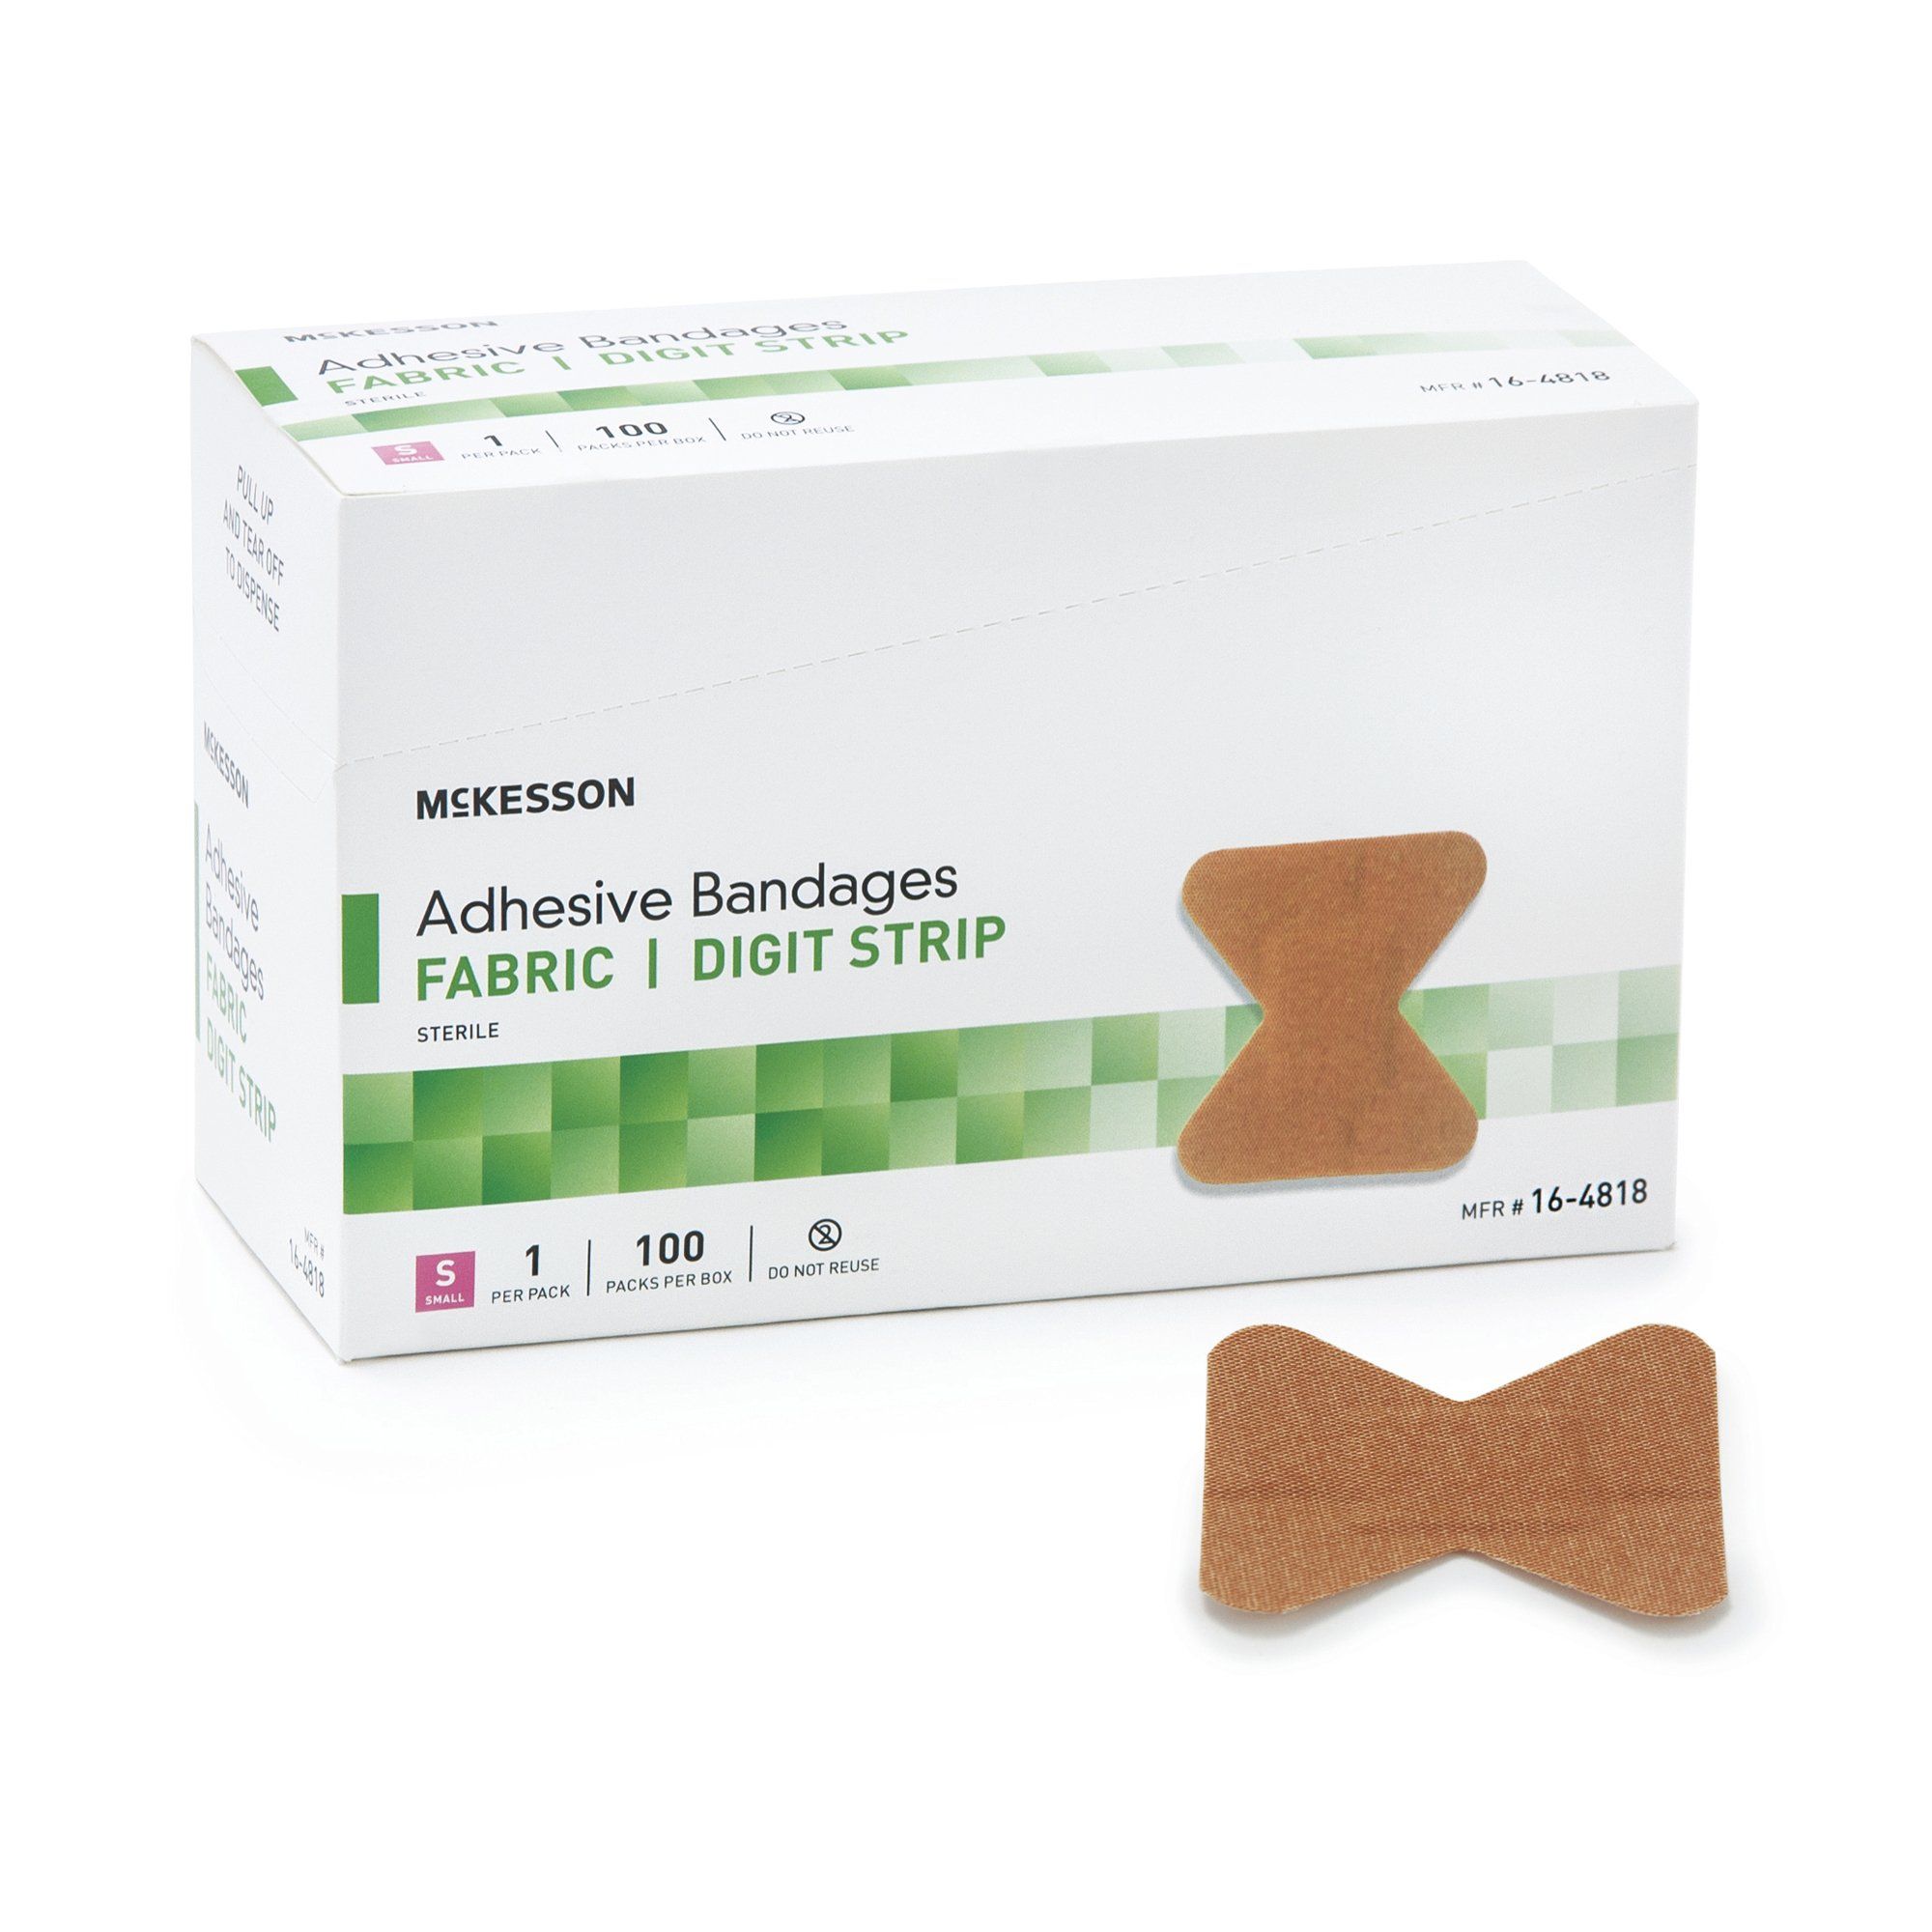 McKesson Adhesive Bandage Fabric Digit Strips, 1.7" x 2" - 100 ct